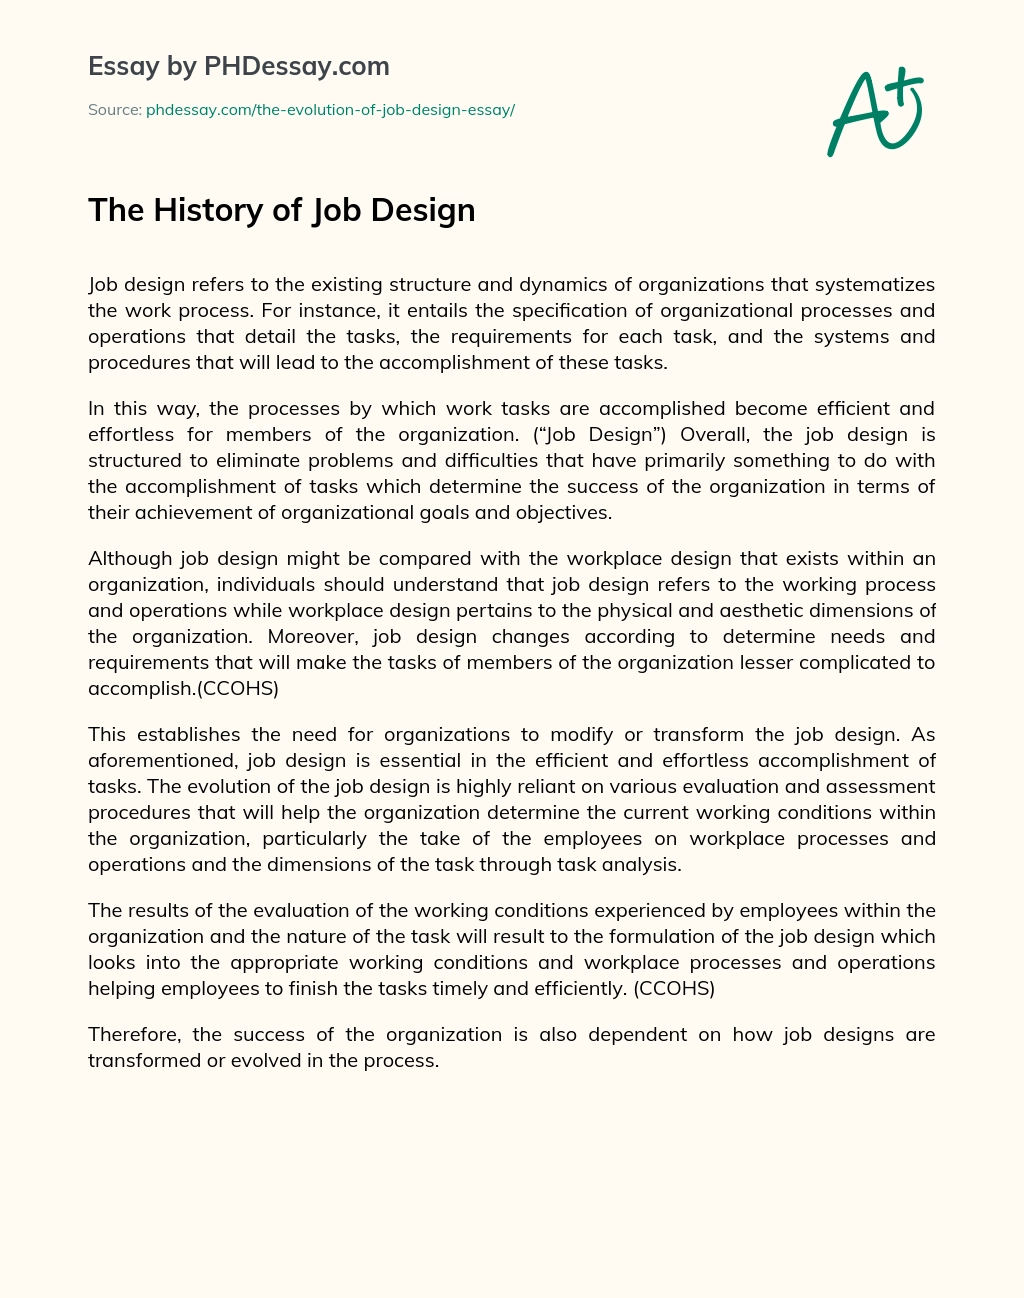 The History of Job Design essay